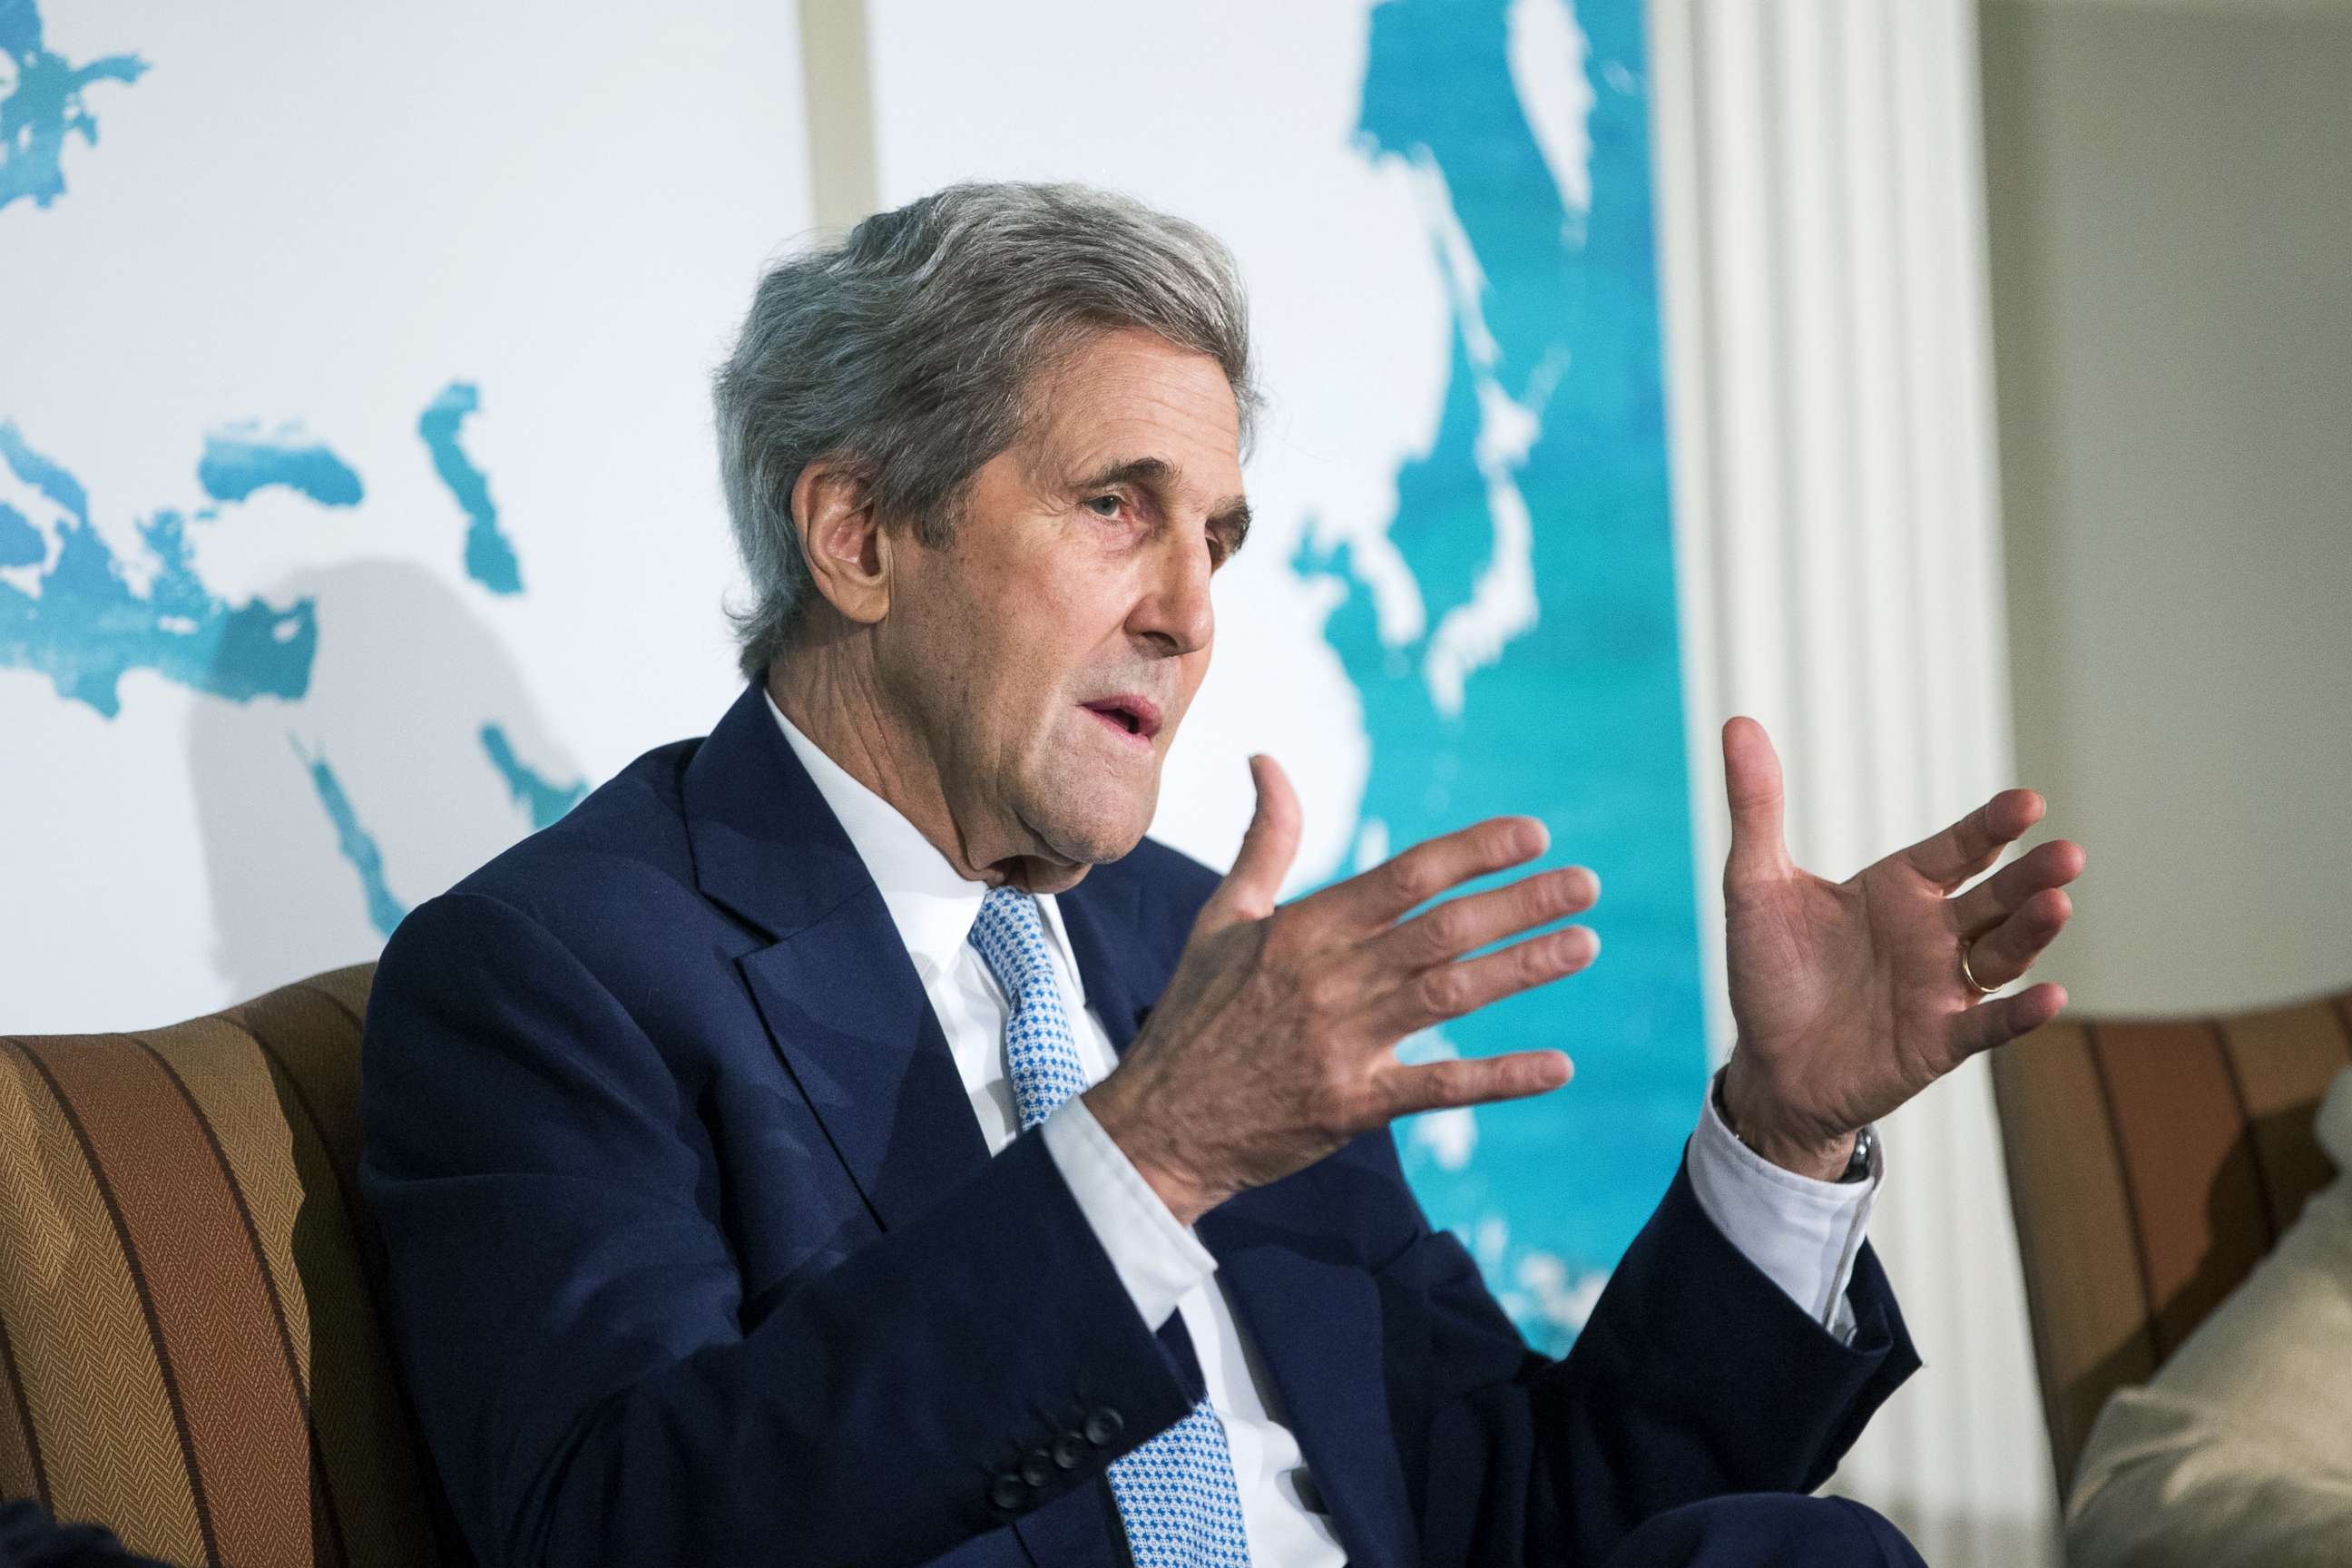 PHOTO: John Kerry, former U.S. Secretary of State, speaks during the International Mayors Climate Summit in Boston, June 7, 2018.